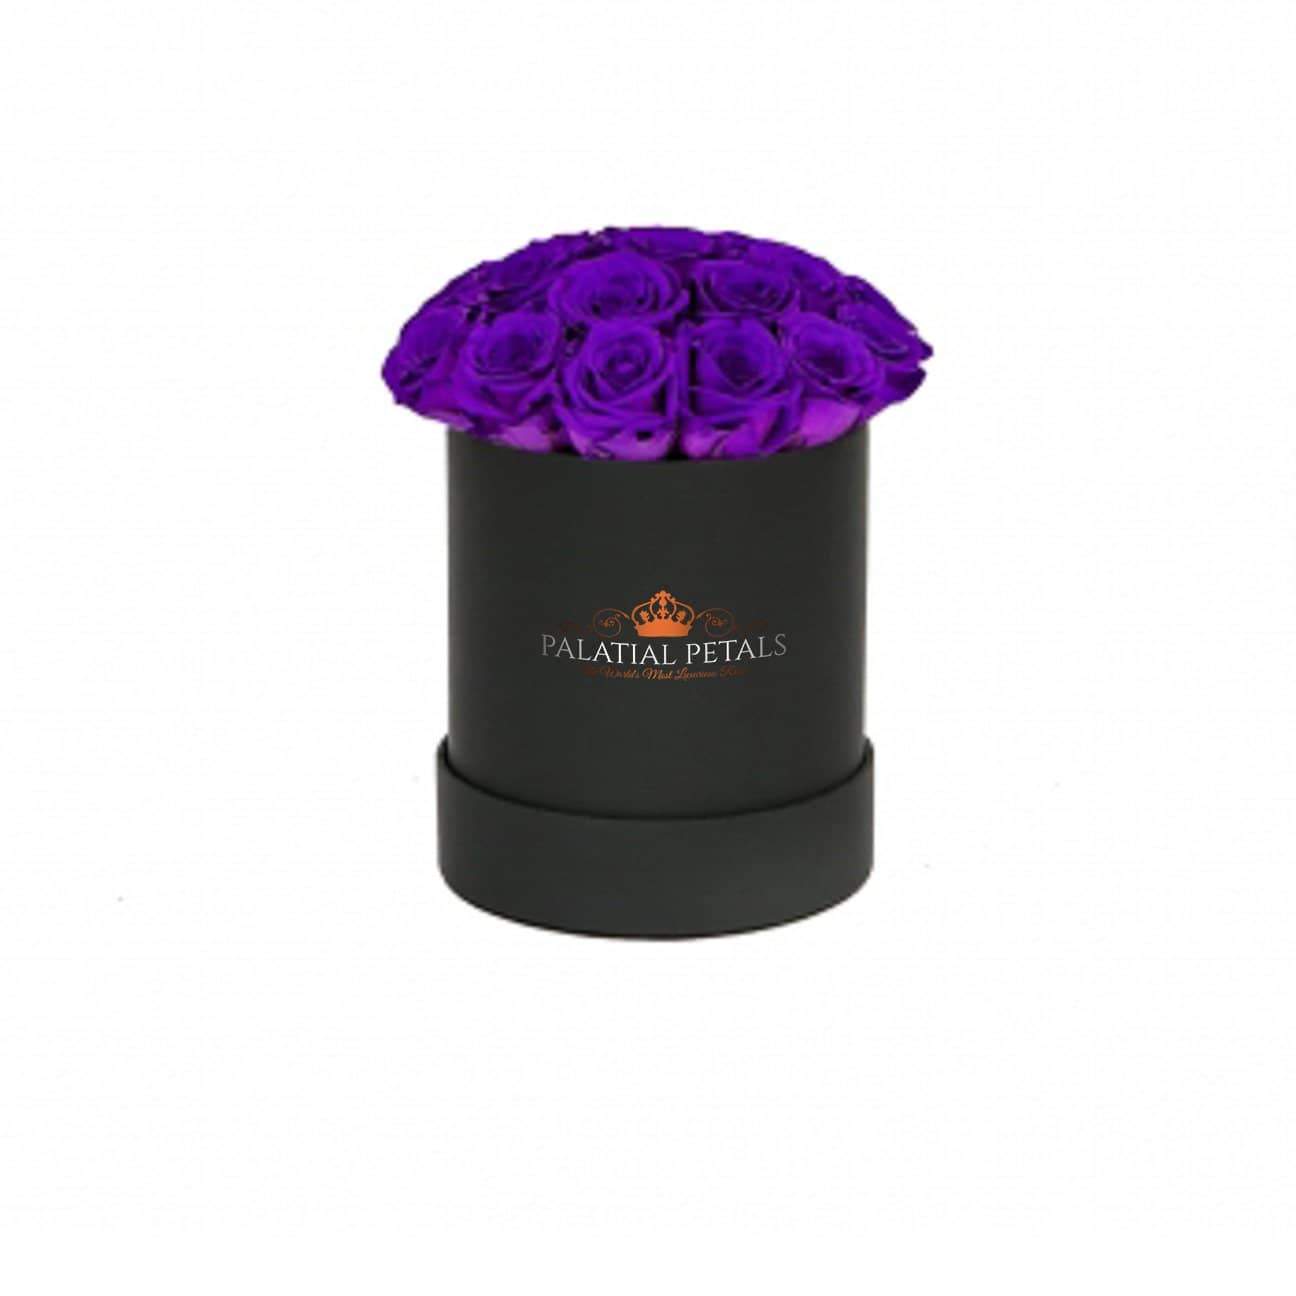 Purple Roses That Last A Year - Petite Rose Box